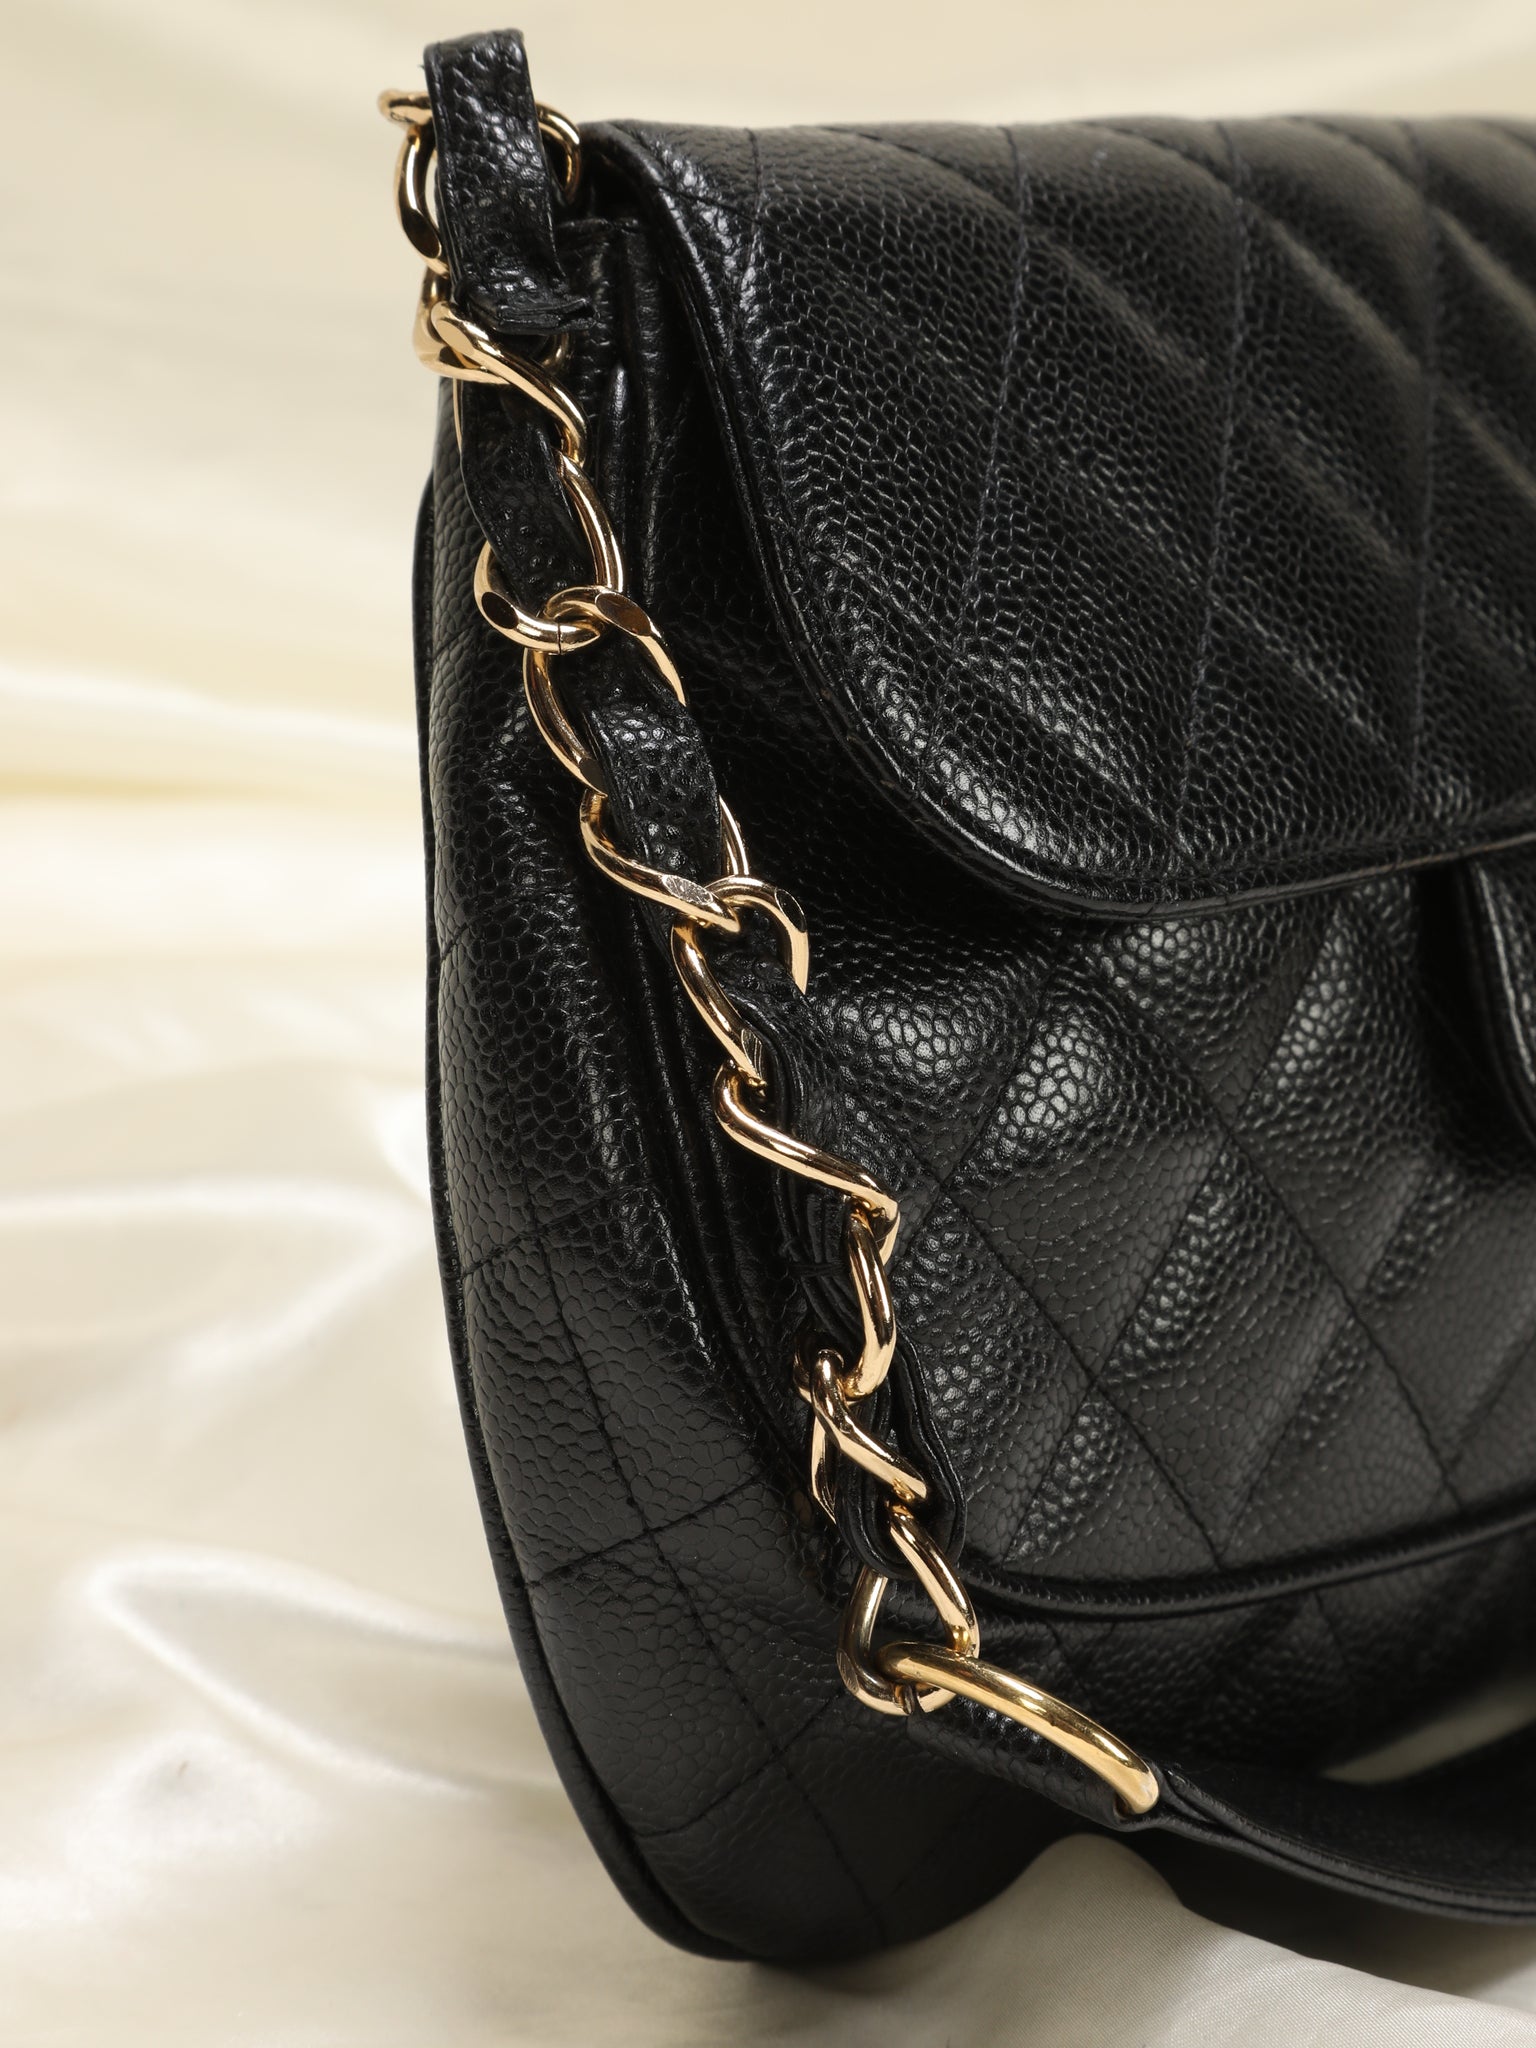 Extremely Rare Chanel Caviar Shoulder Bag